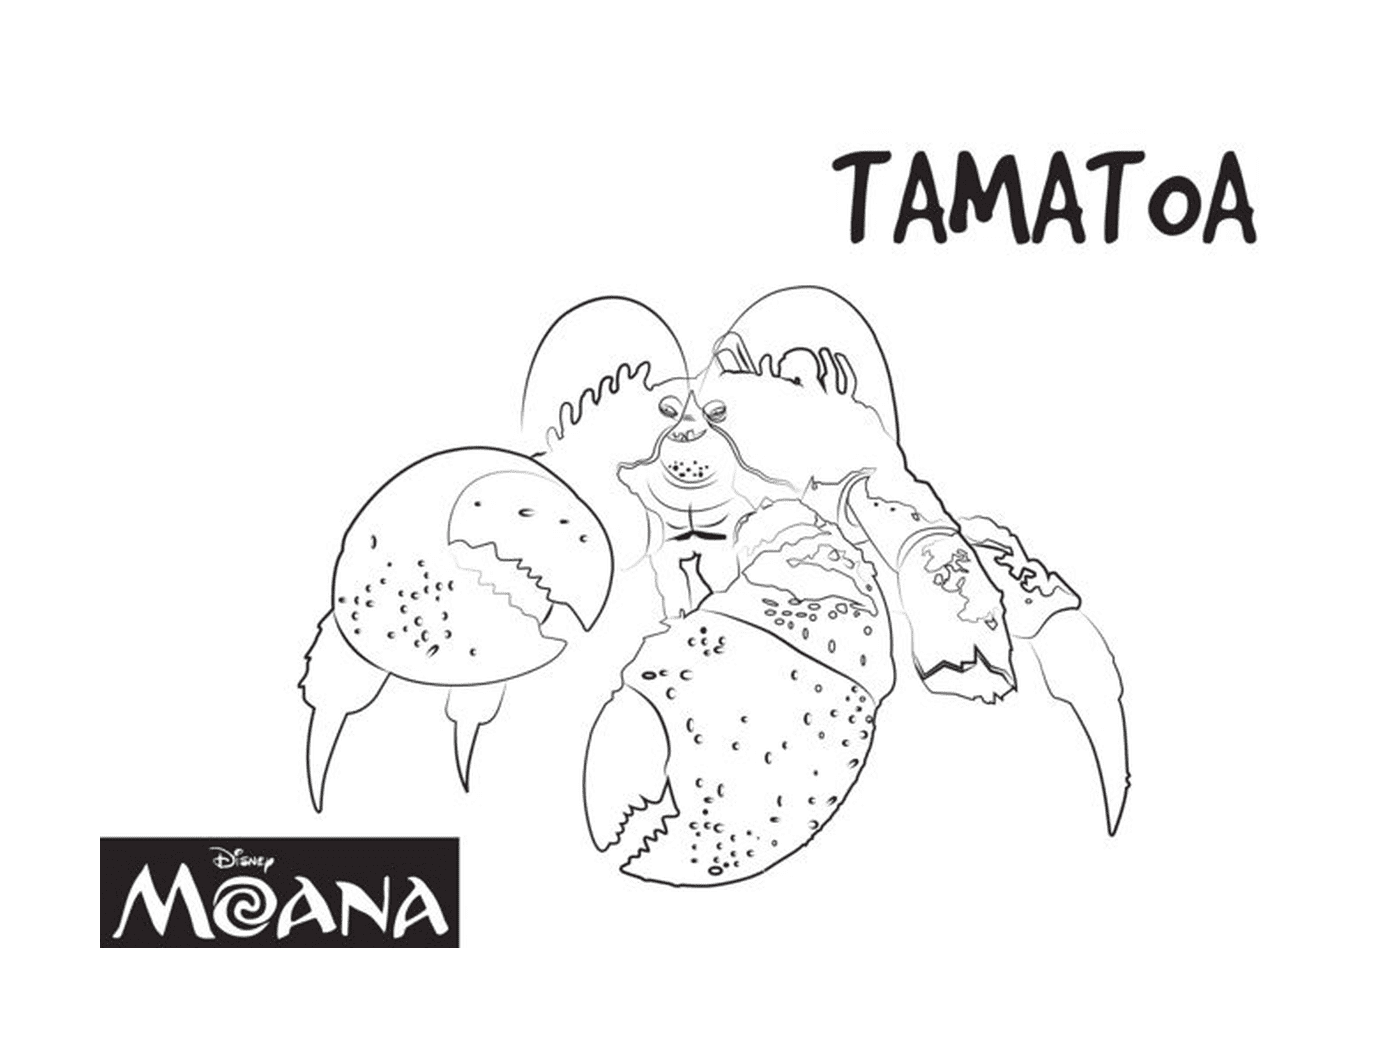   Tamatoa, créature exotique de Moana 